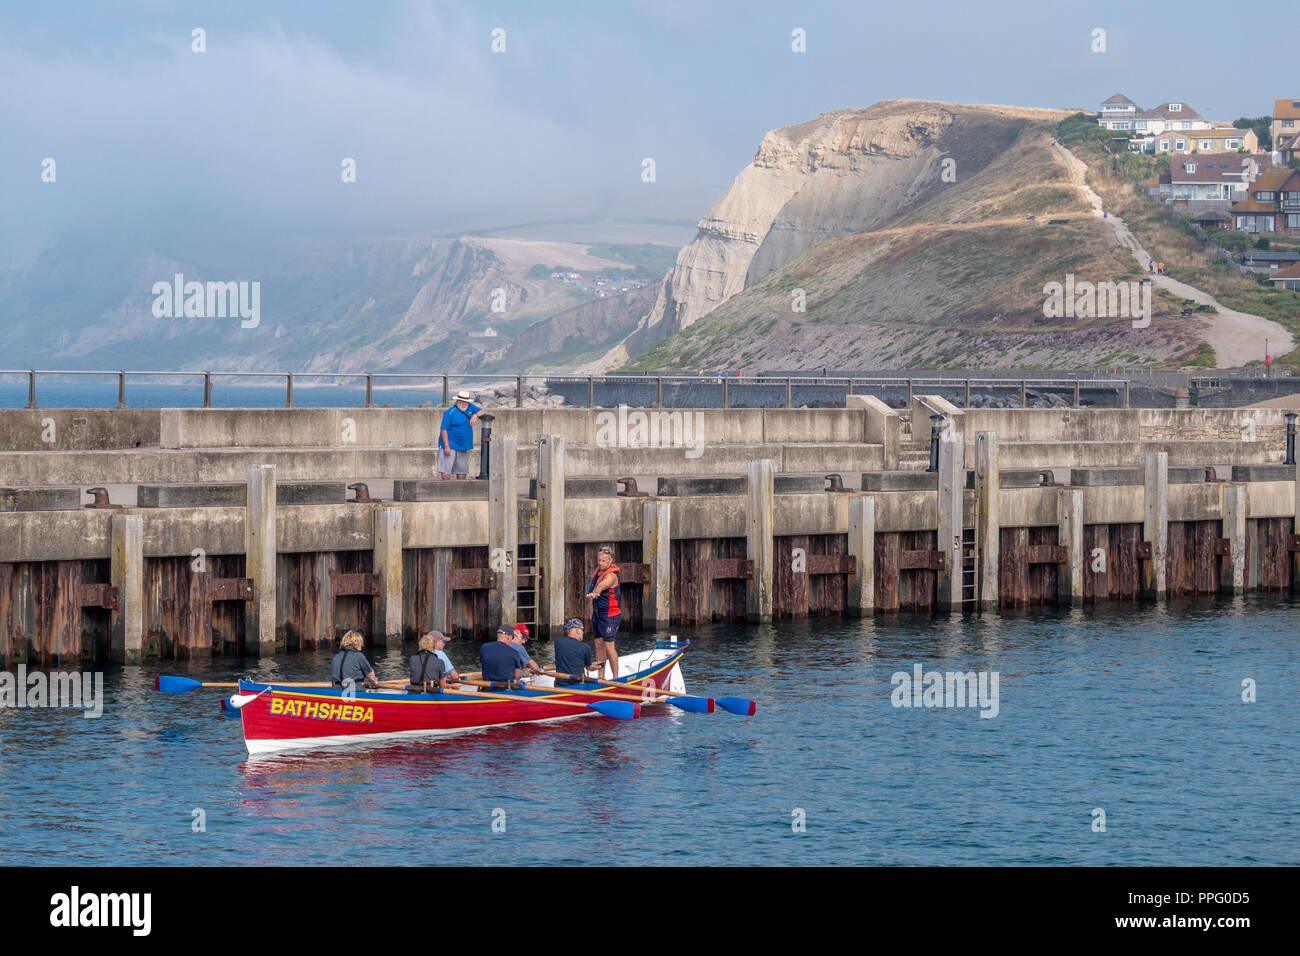 Gig boat Bathsheba pictured in Bridport Harbour, West Bay, Dorset, UK. Stock Photo